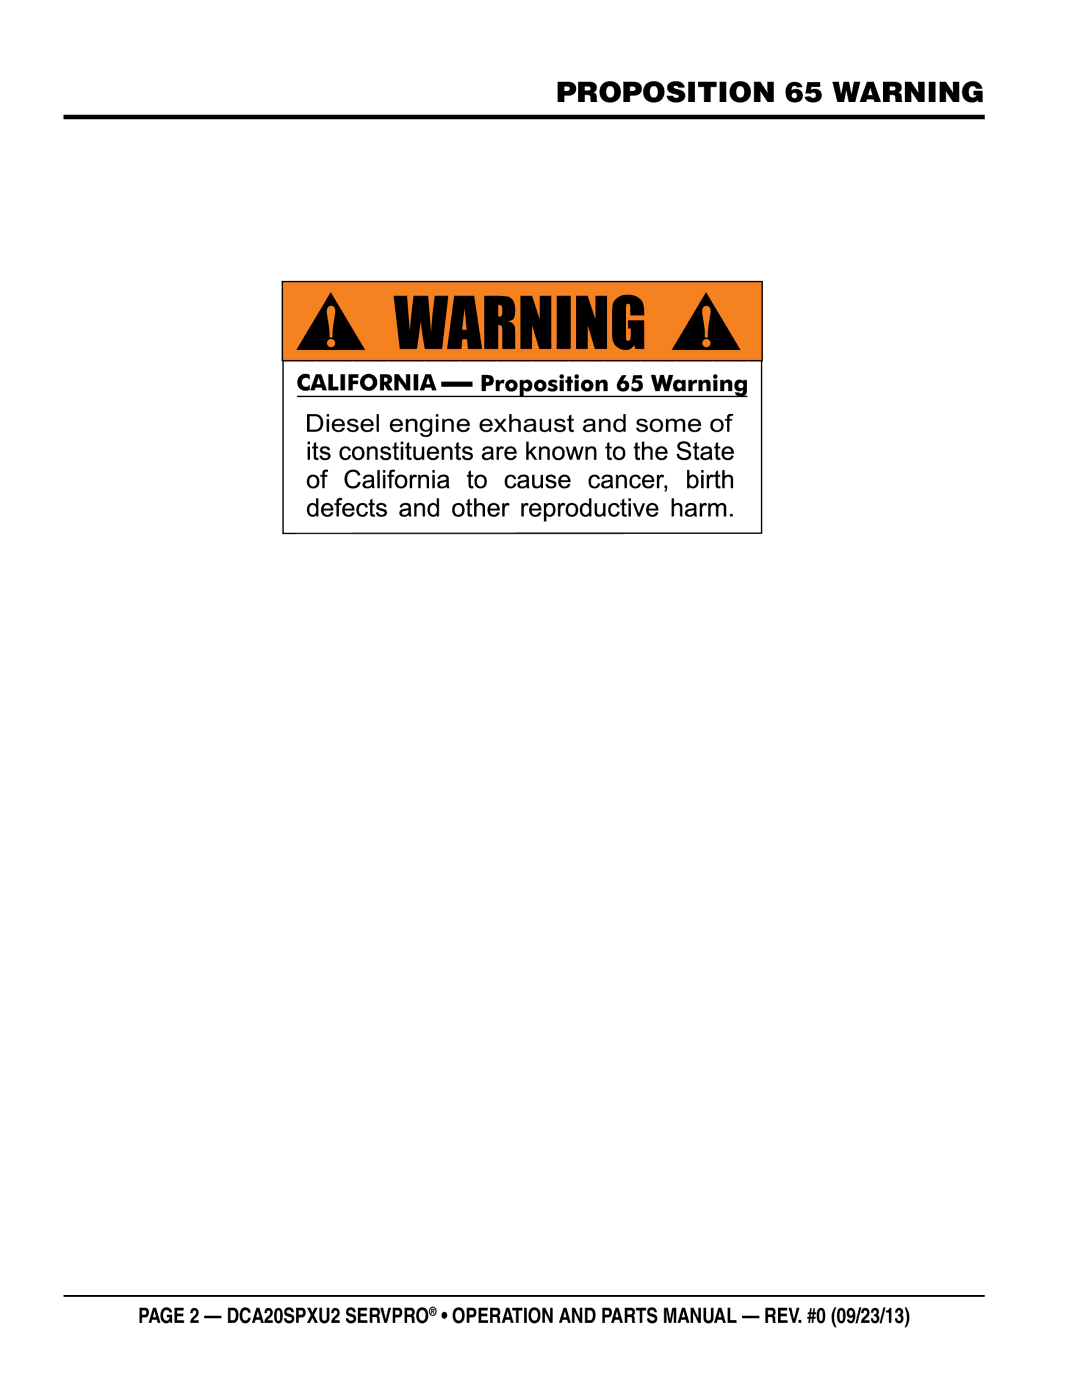 Multiquip DCA20spxu2 manual Proposition 65 warning 